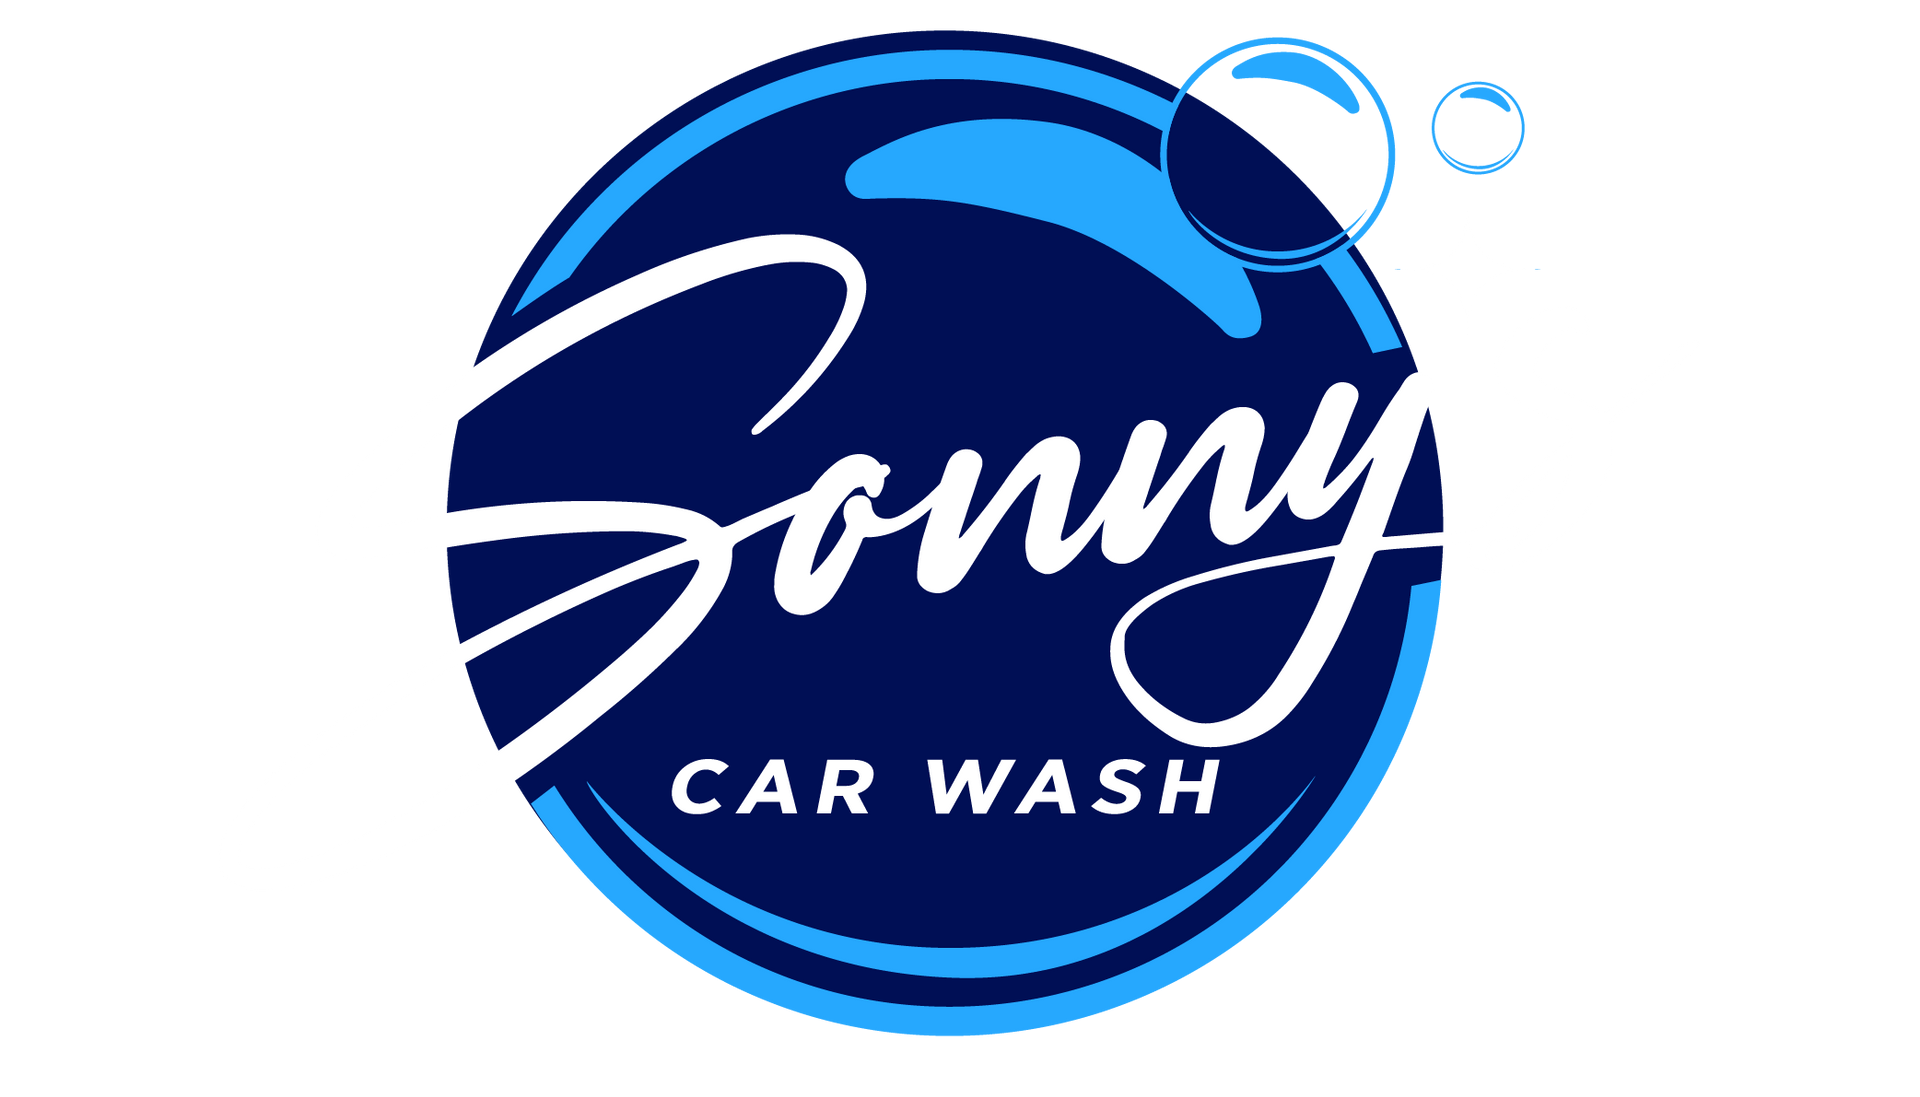 Sonny's Car Wash in Lakewood, CO